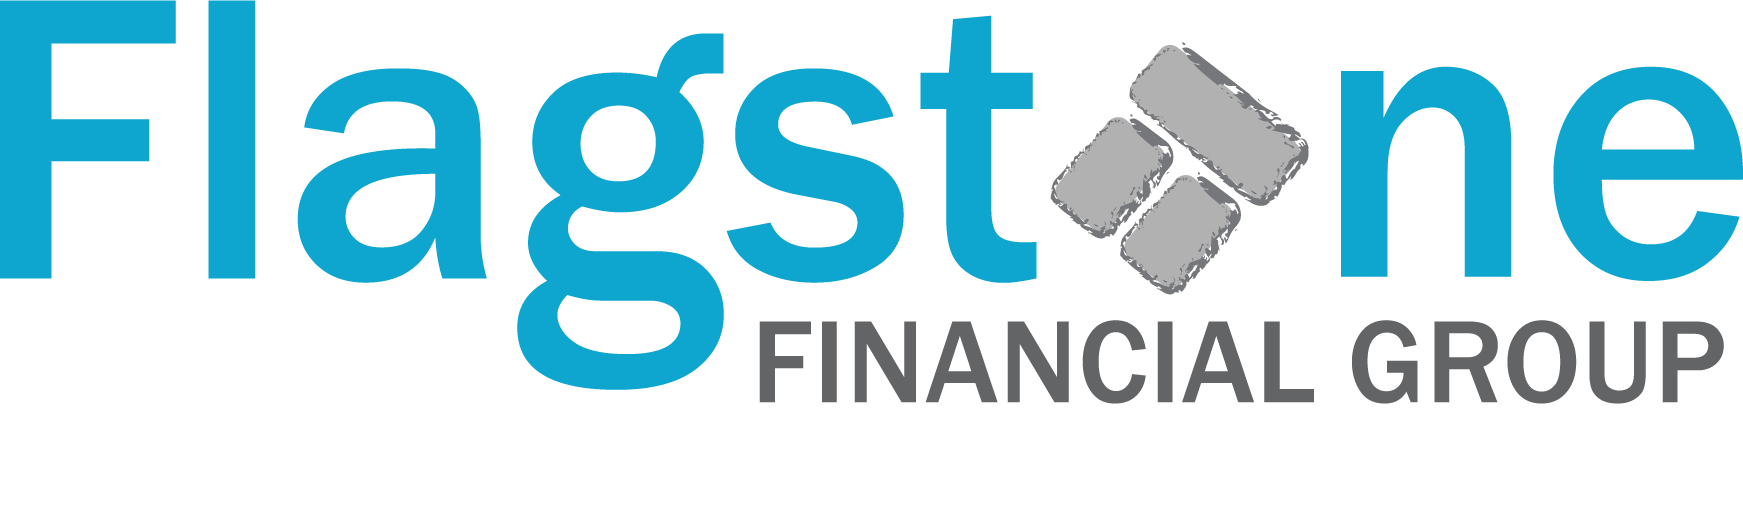 Flagstone Financial Group